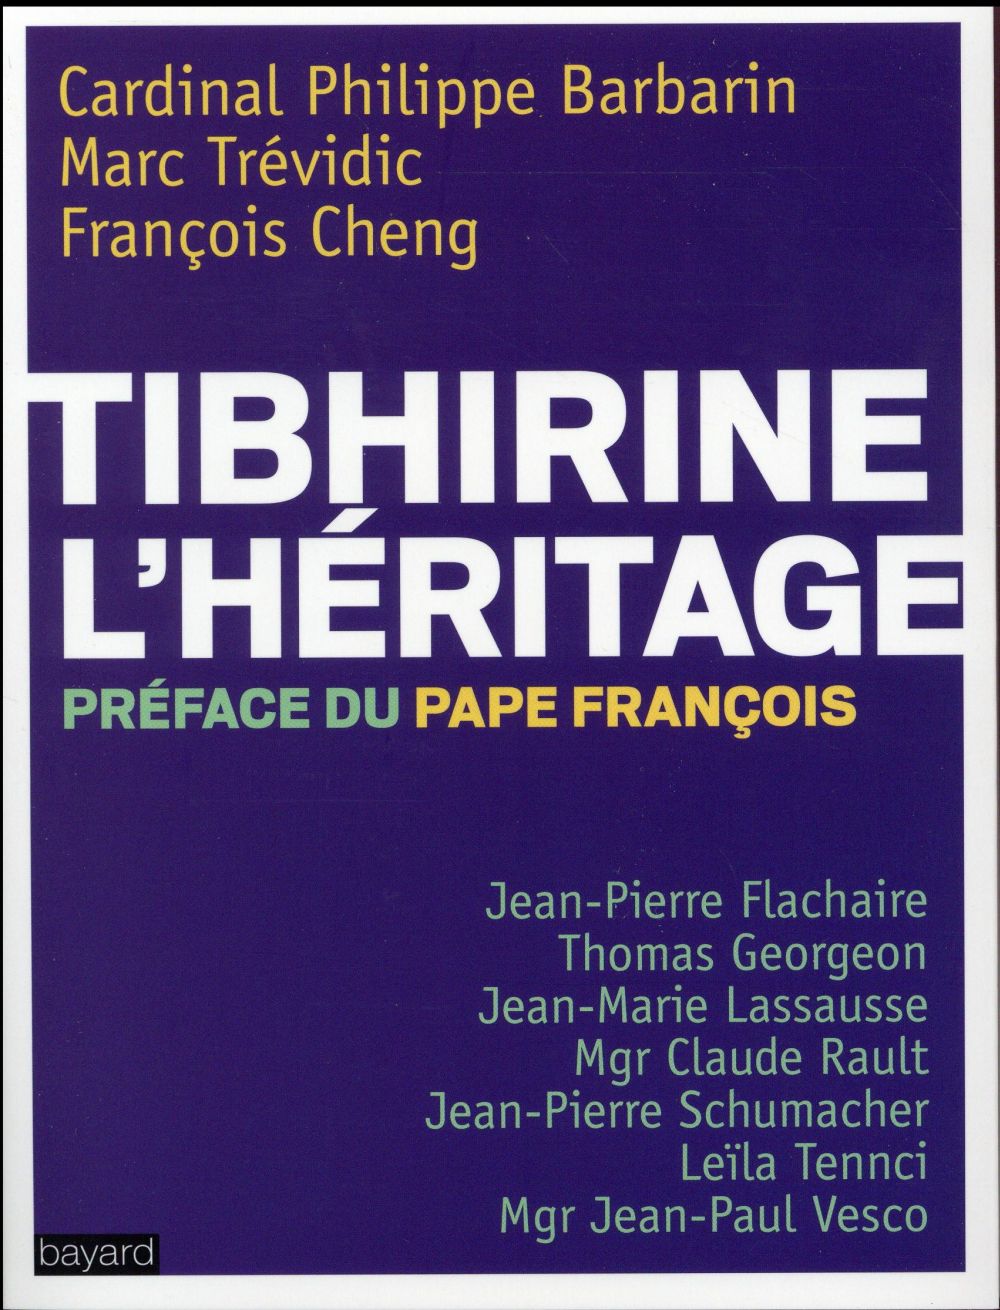 TIBHIRINE : L'HERITAGE